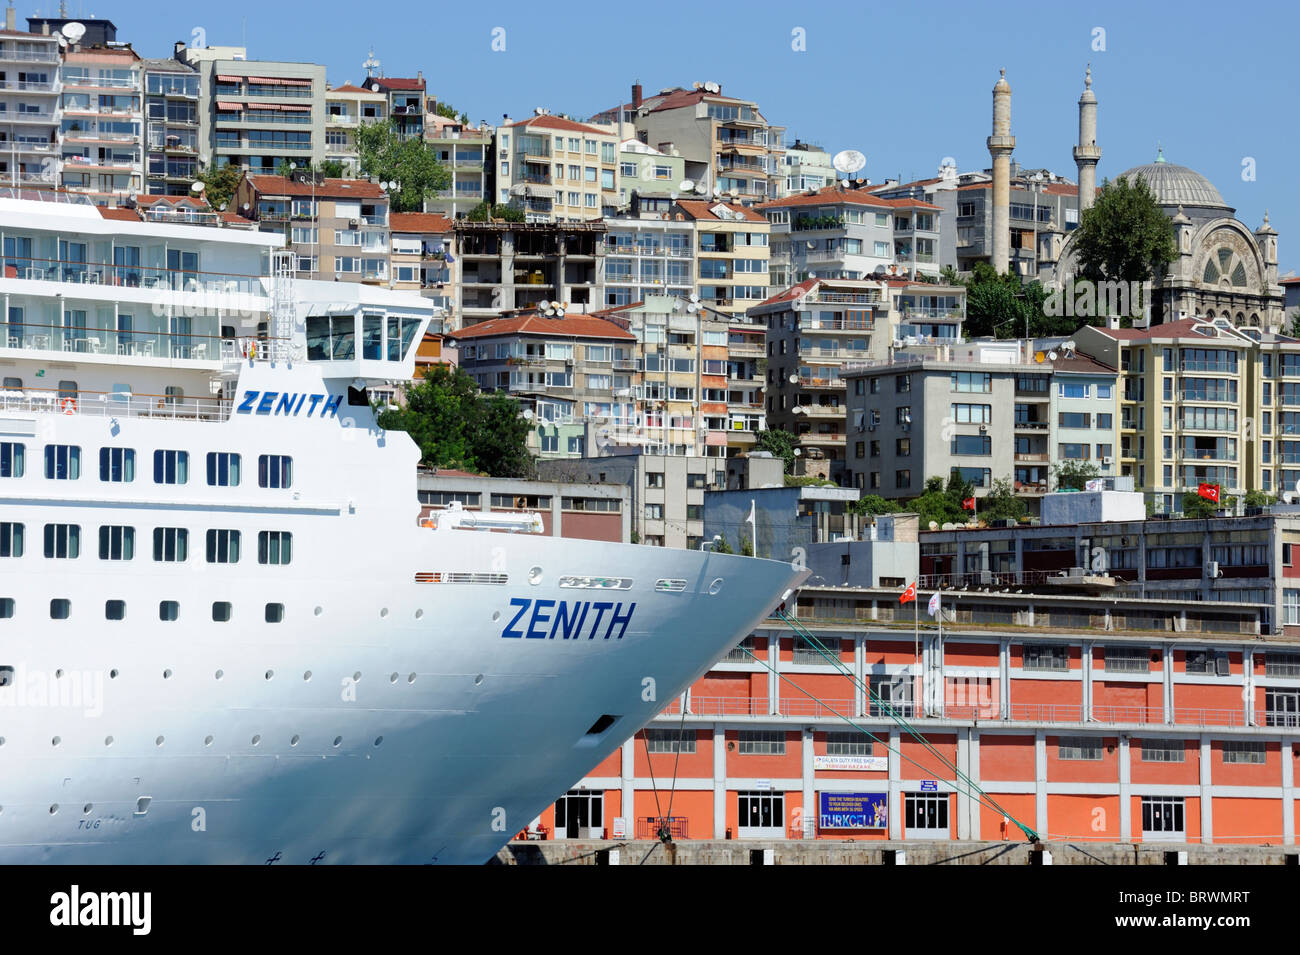 The cruise ship Zenith docked at the cruise ship terminal in Beyoglu, Istanbul Stock Photo